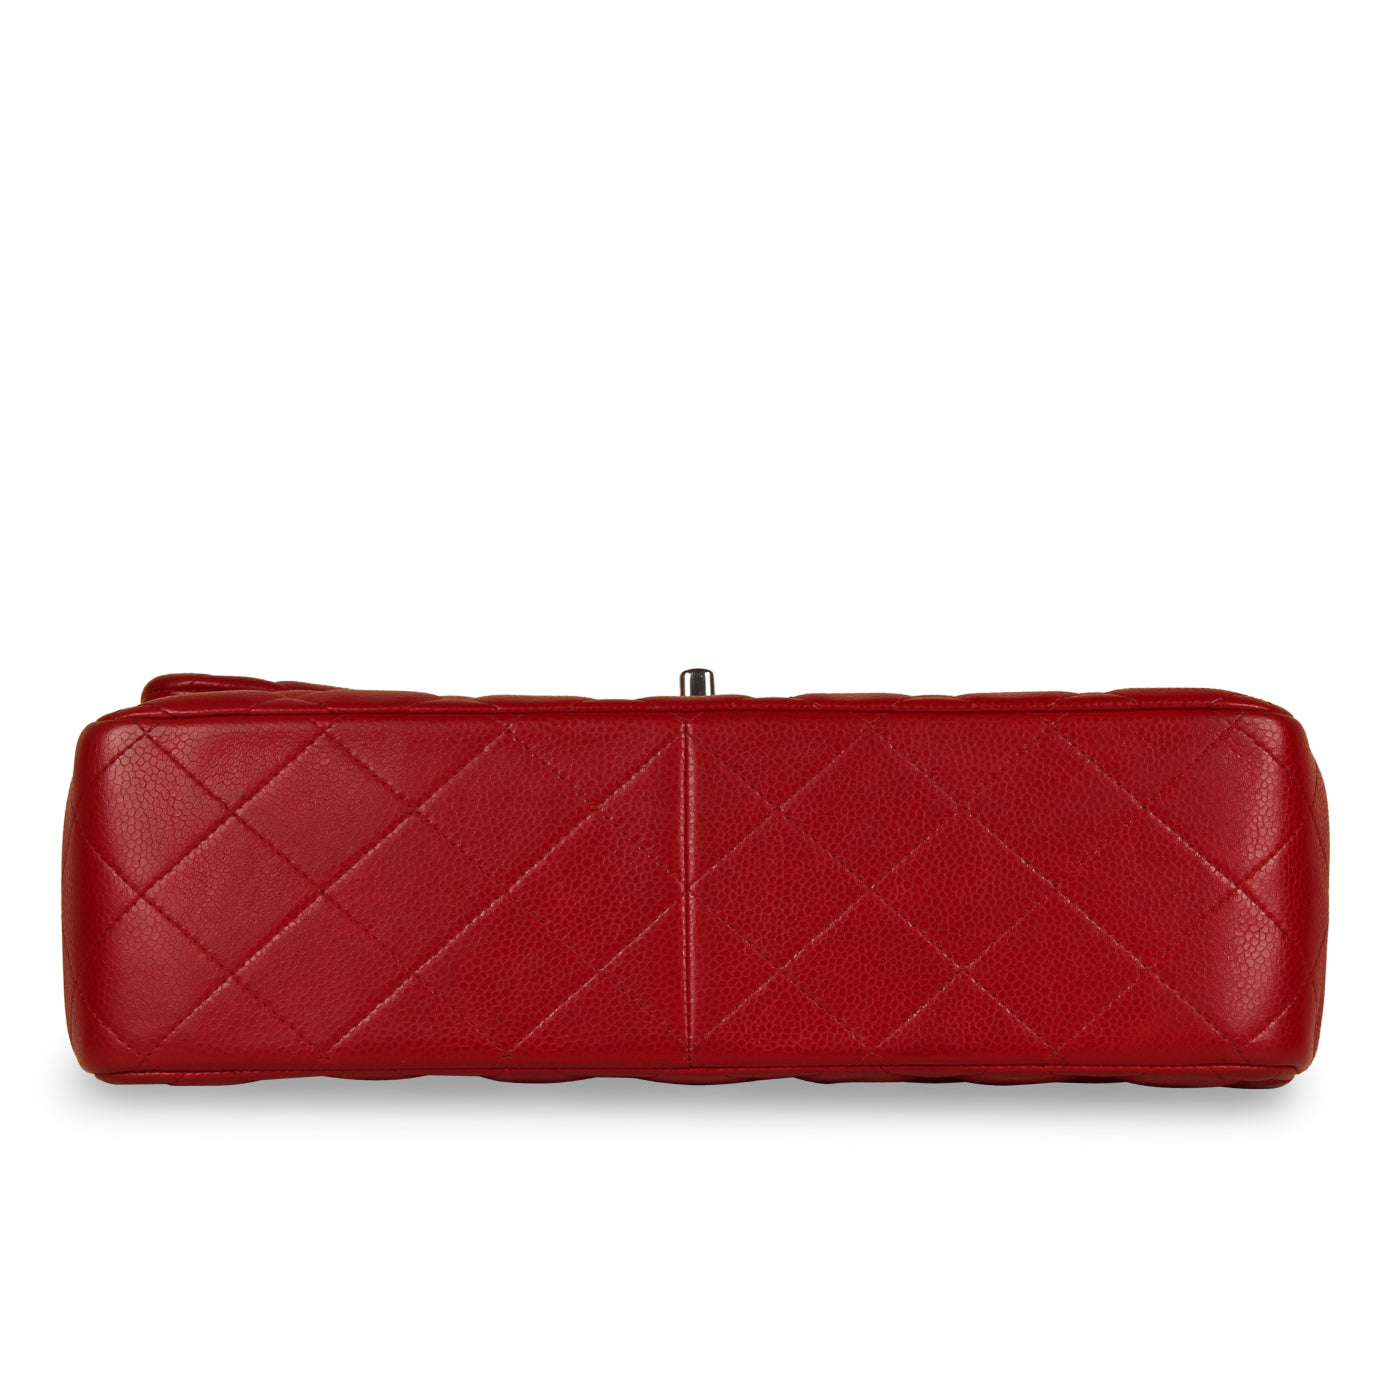 Chanel Classic Flap Bag Jumbo - Red Caviar - Pre Loved